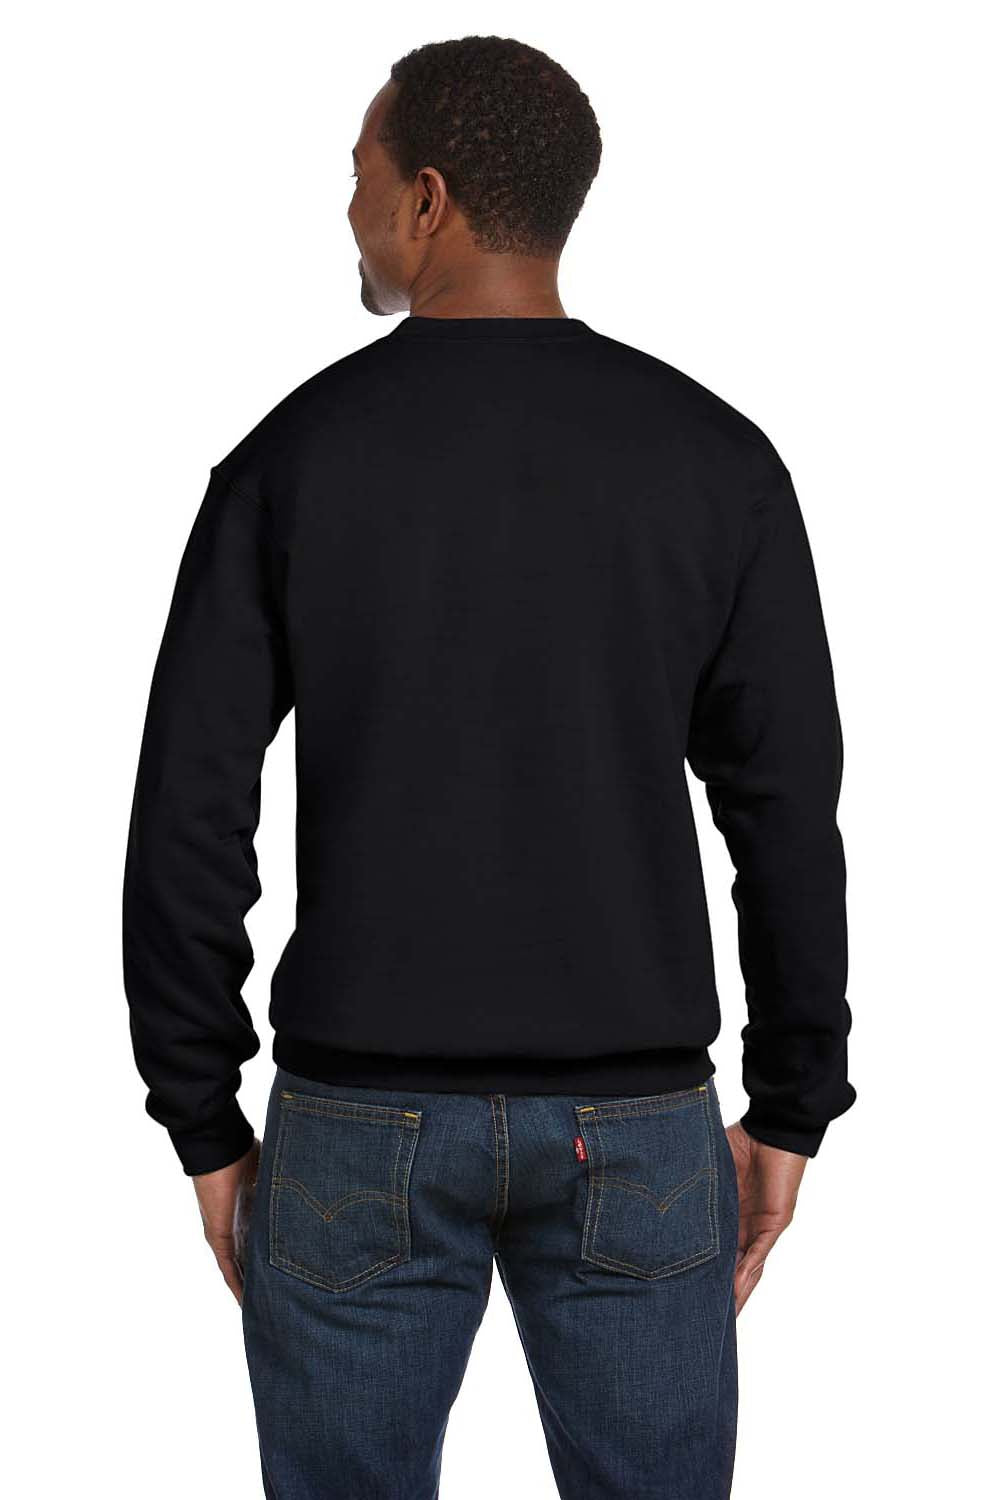 Hanes P160 Mens EcoSmart Print Pro XP Fleece Crewneck Sweatshirt Black Back